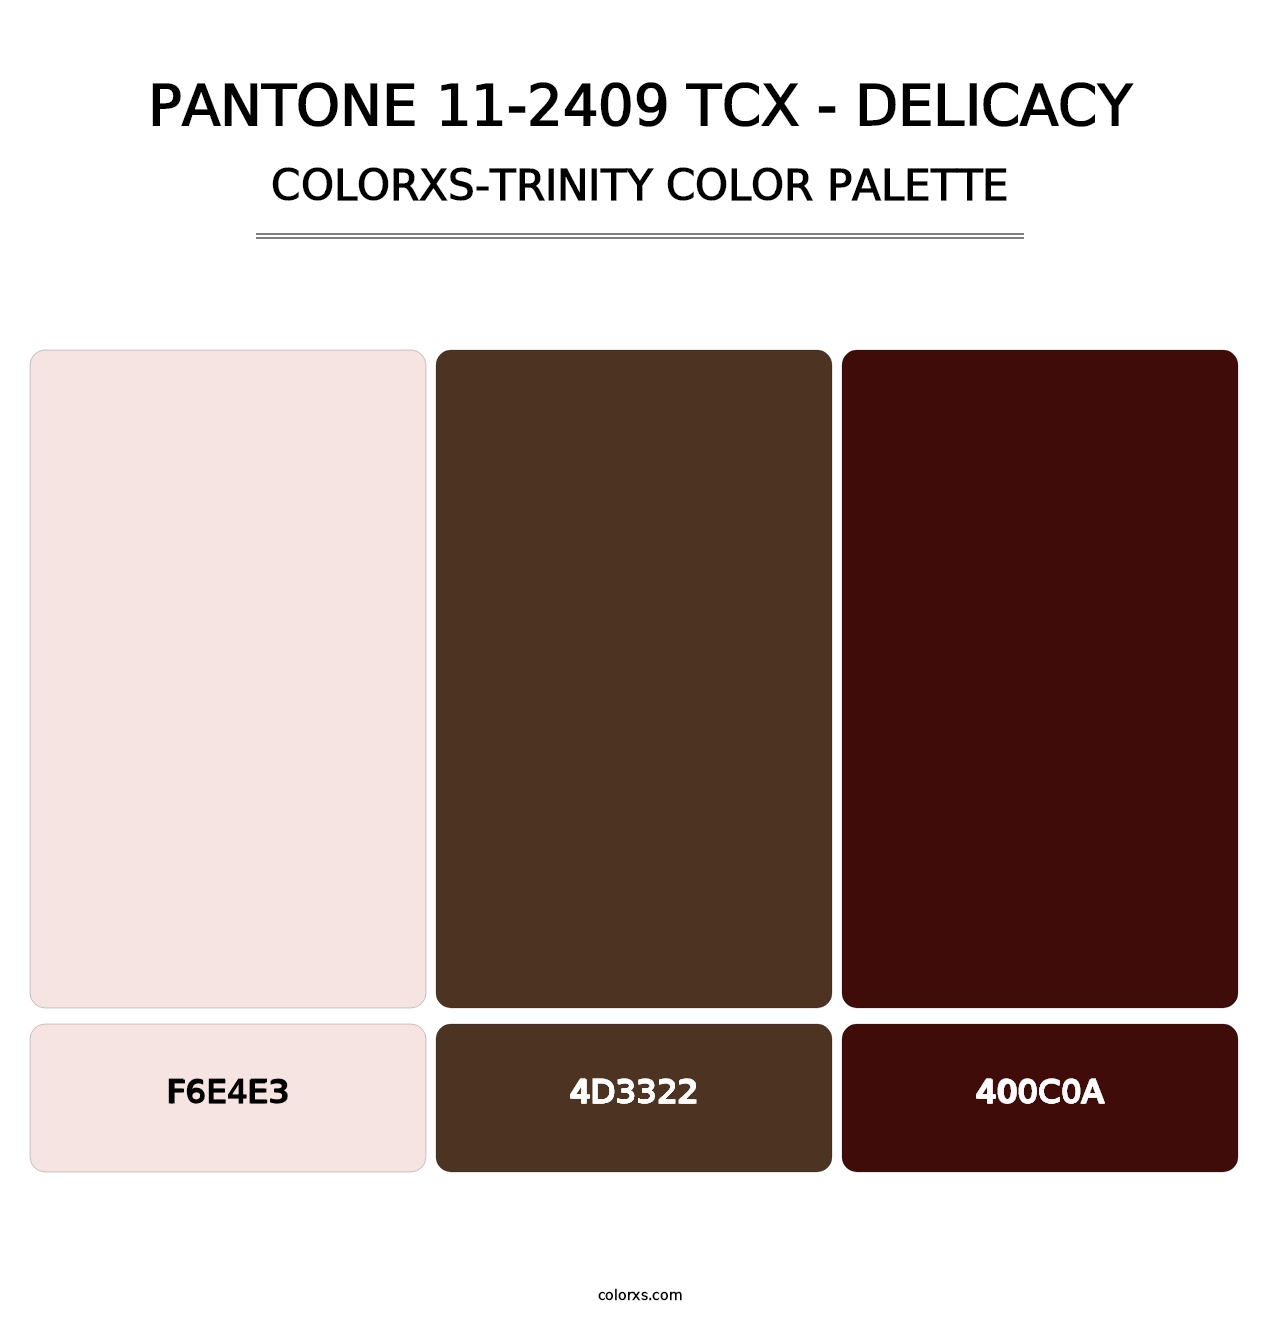 PANTONE 11-2409 TCX - Delicacy - Colorxs Trinity Palette